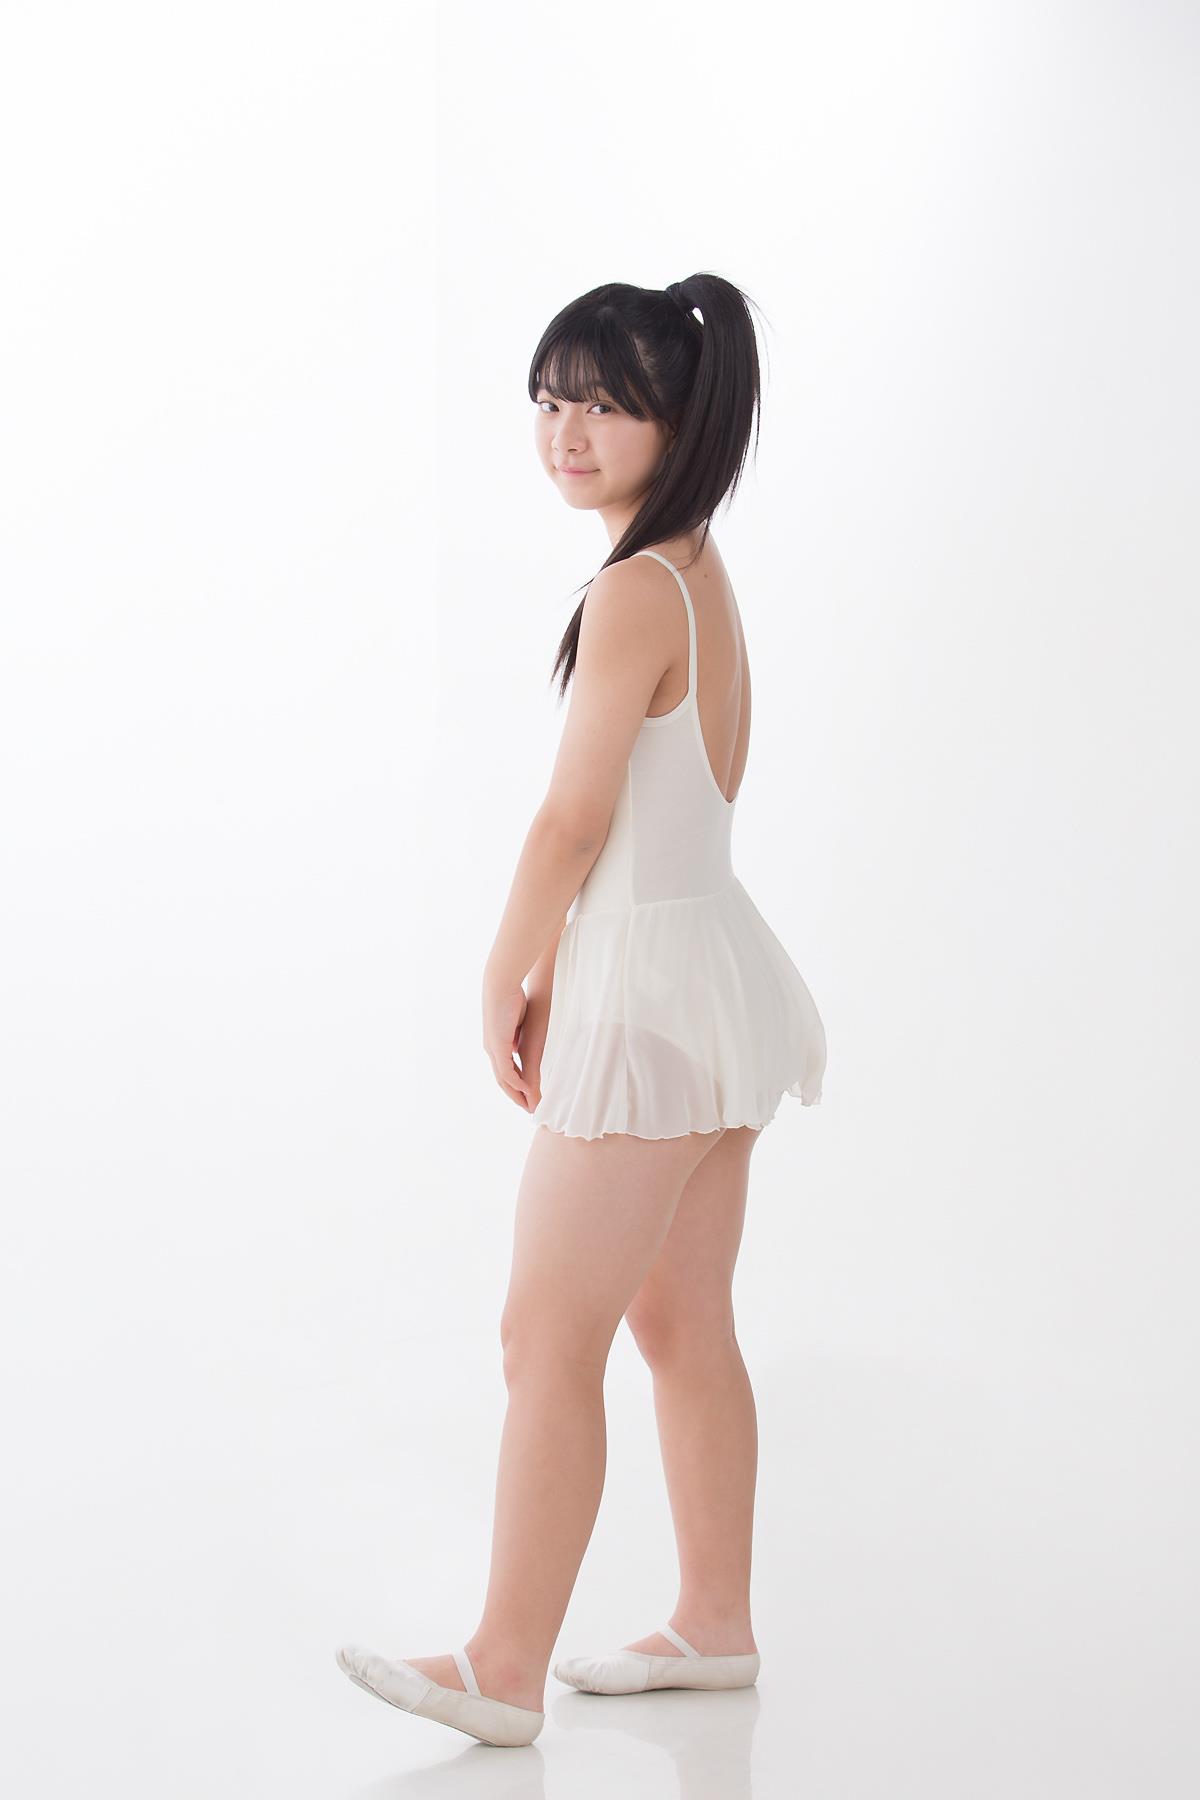 Minisuka.tv Saria Natsume 夏目咲莉愛 - Premium Gallery 2.2 - 13.jpg